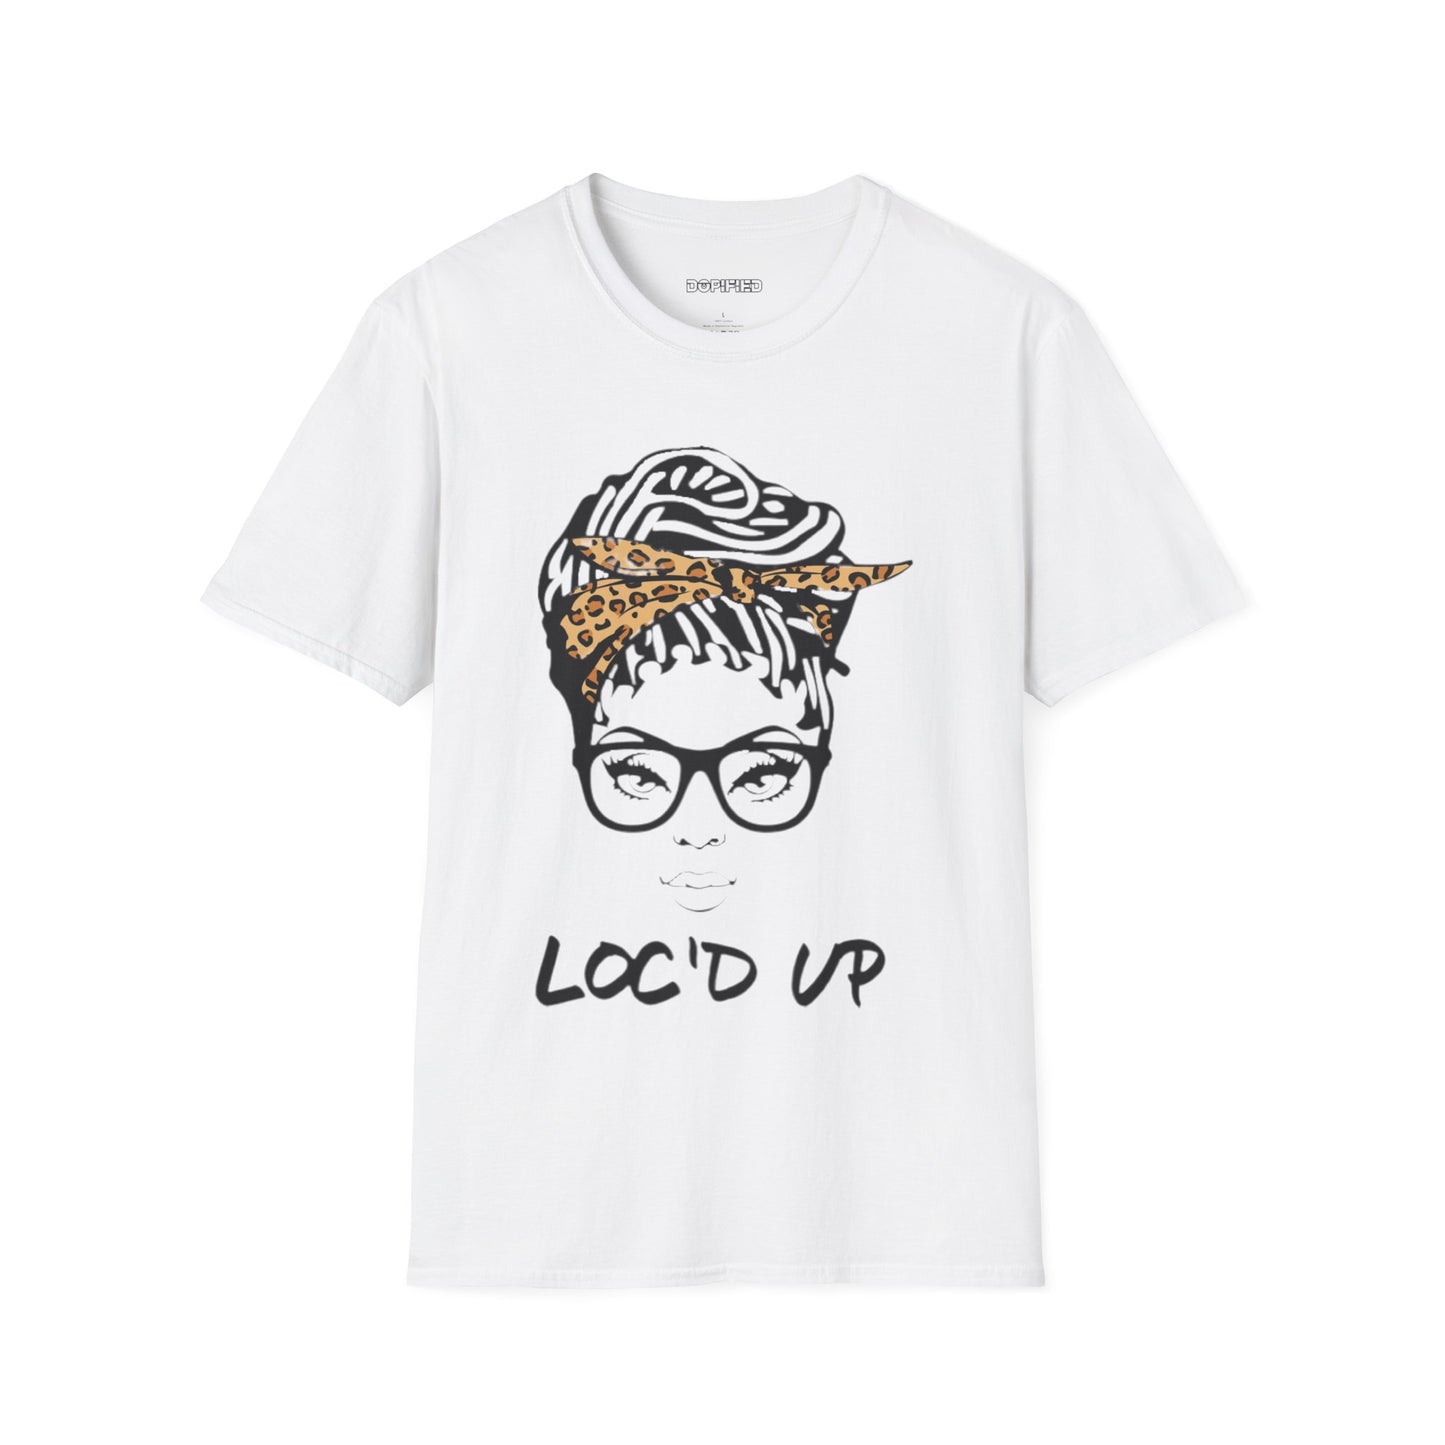 Loc’d Up Females Soft style T-Shirt